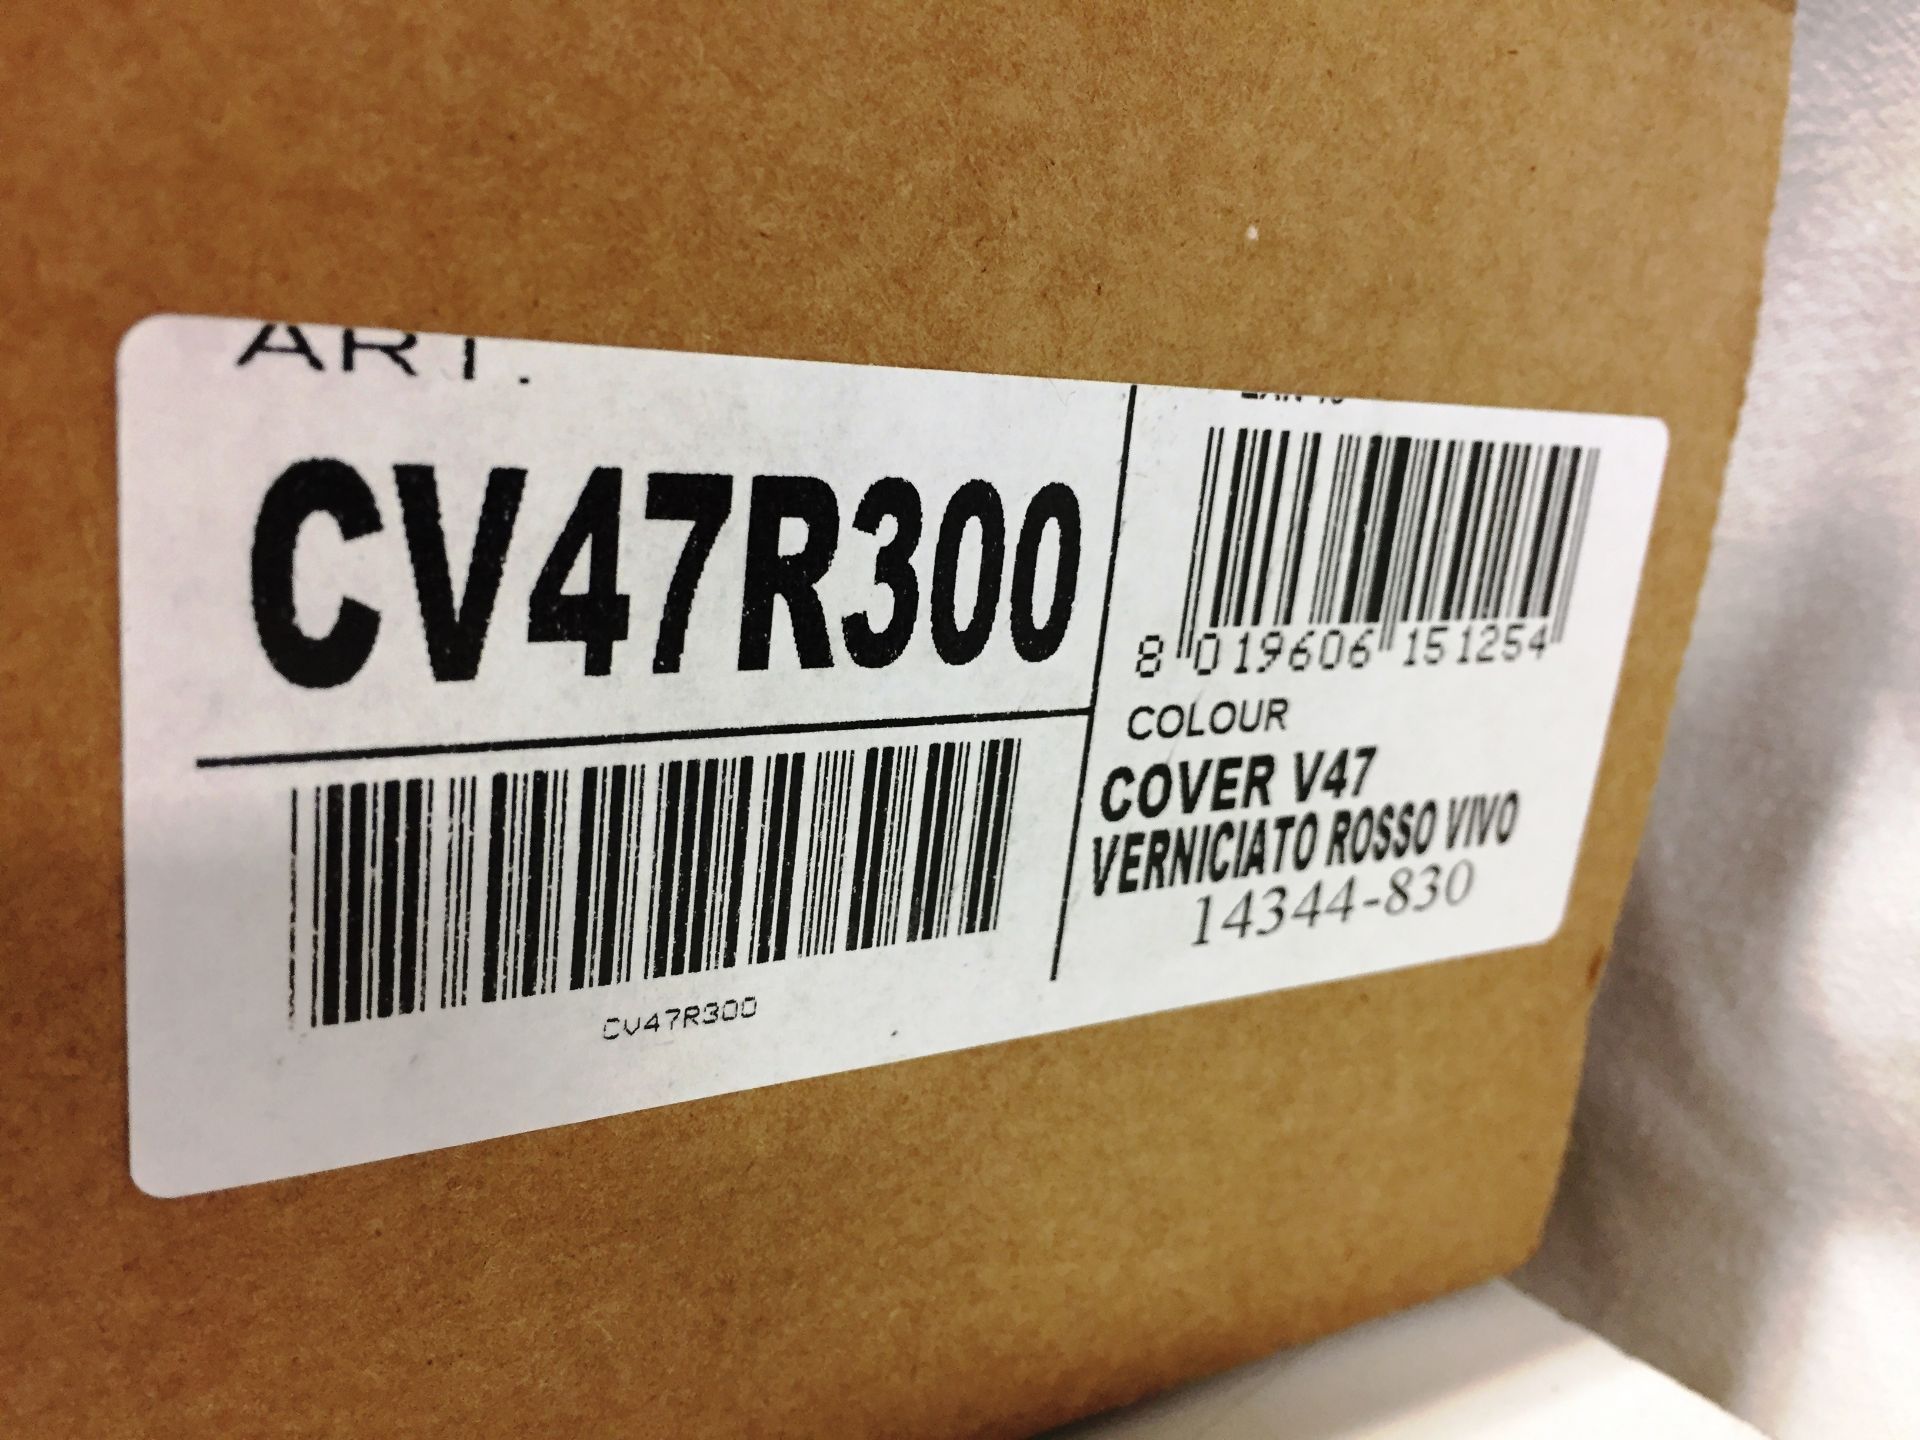 Givi CV47R300 Cover | Ferrari Red | RRP£29.99 - Image 2 of 3